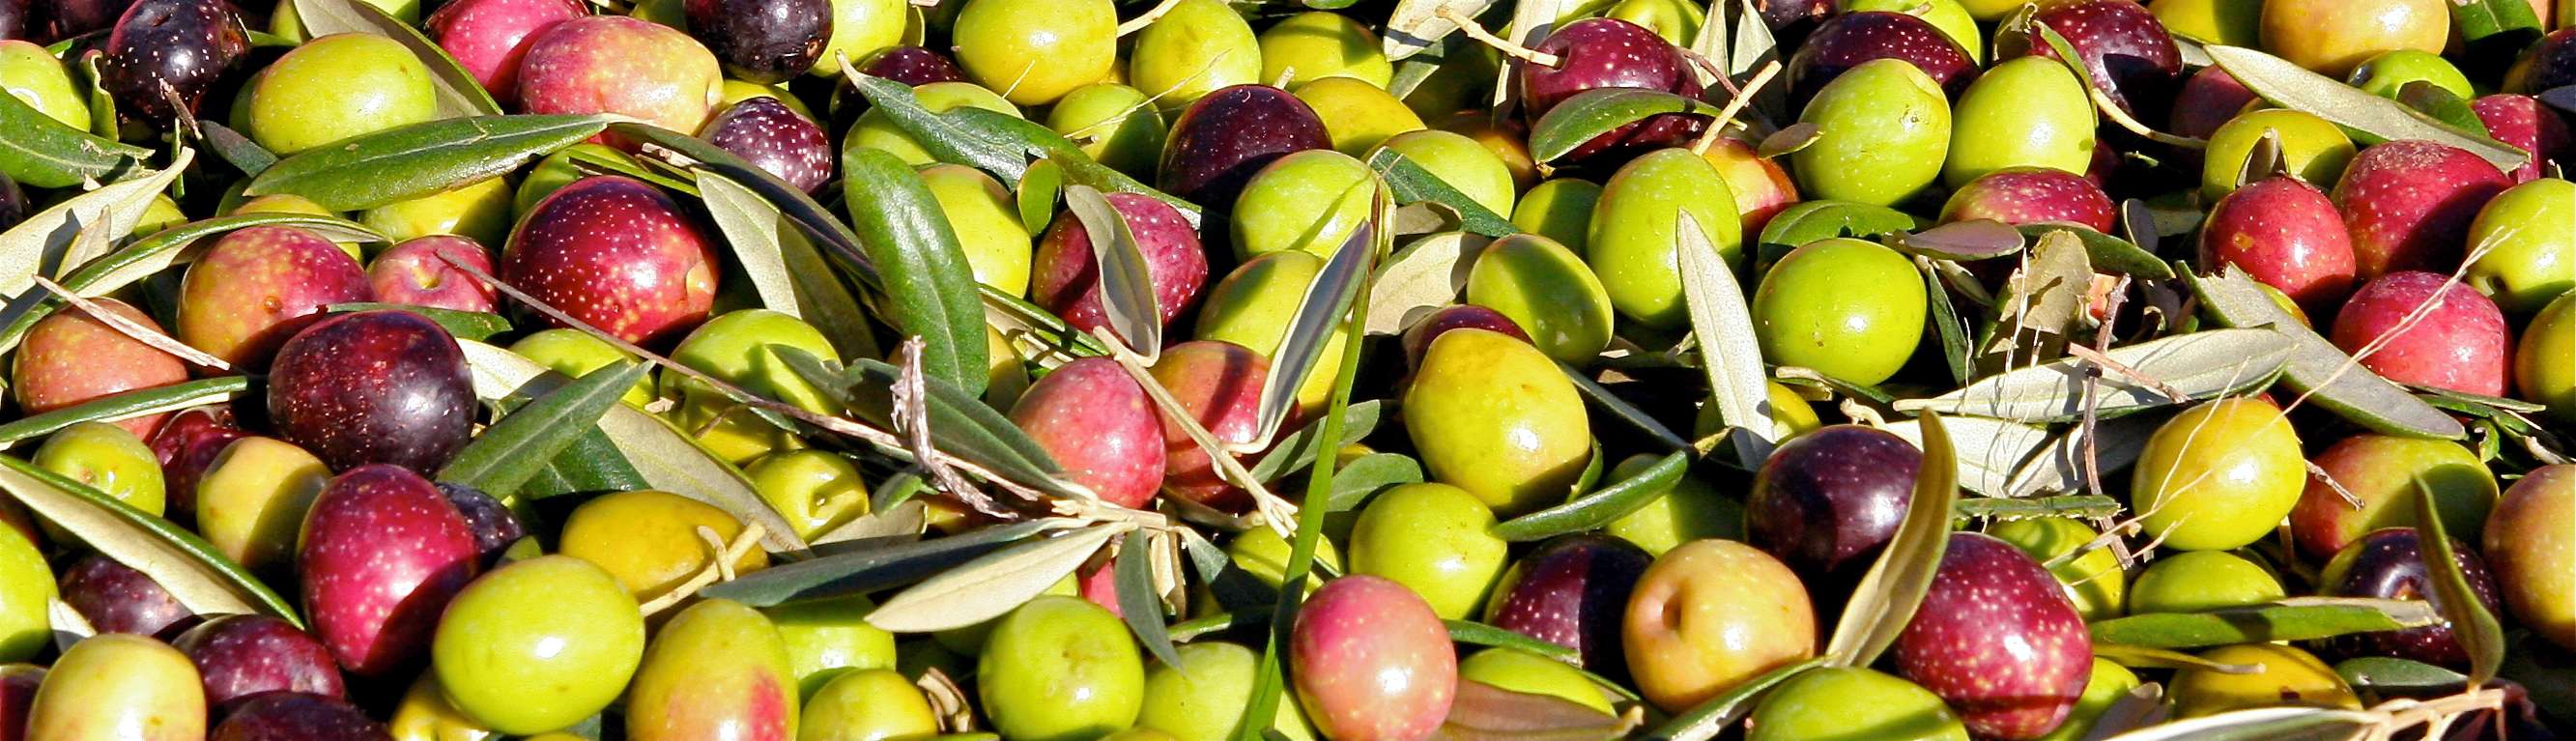 Olive Harvesting